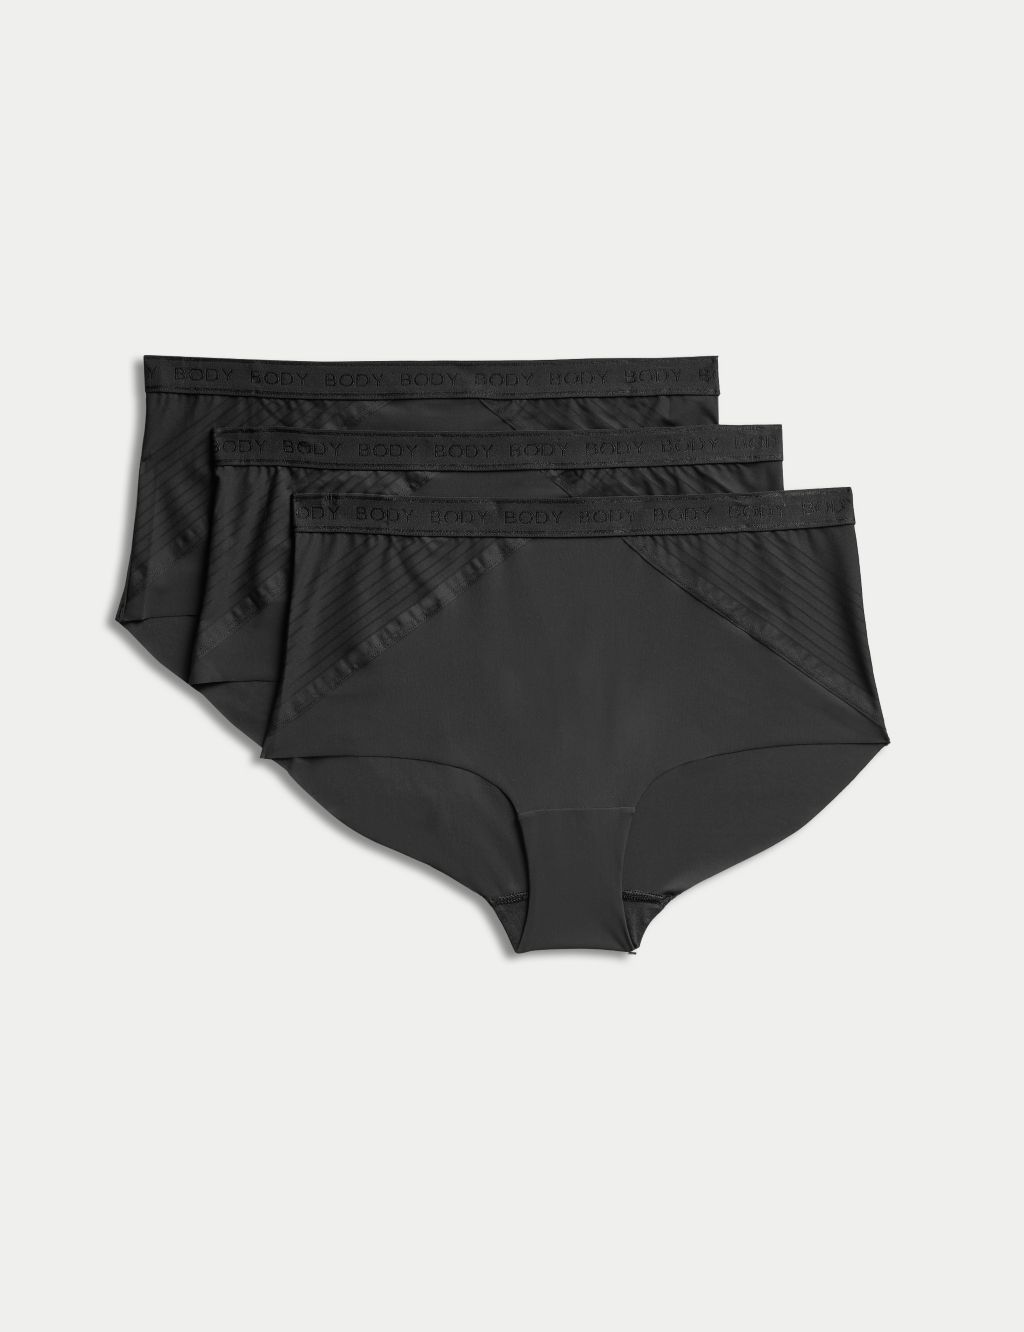 Pants Xs Black Cotton Knickers Size 18 Jumpsuit Shorts For Women